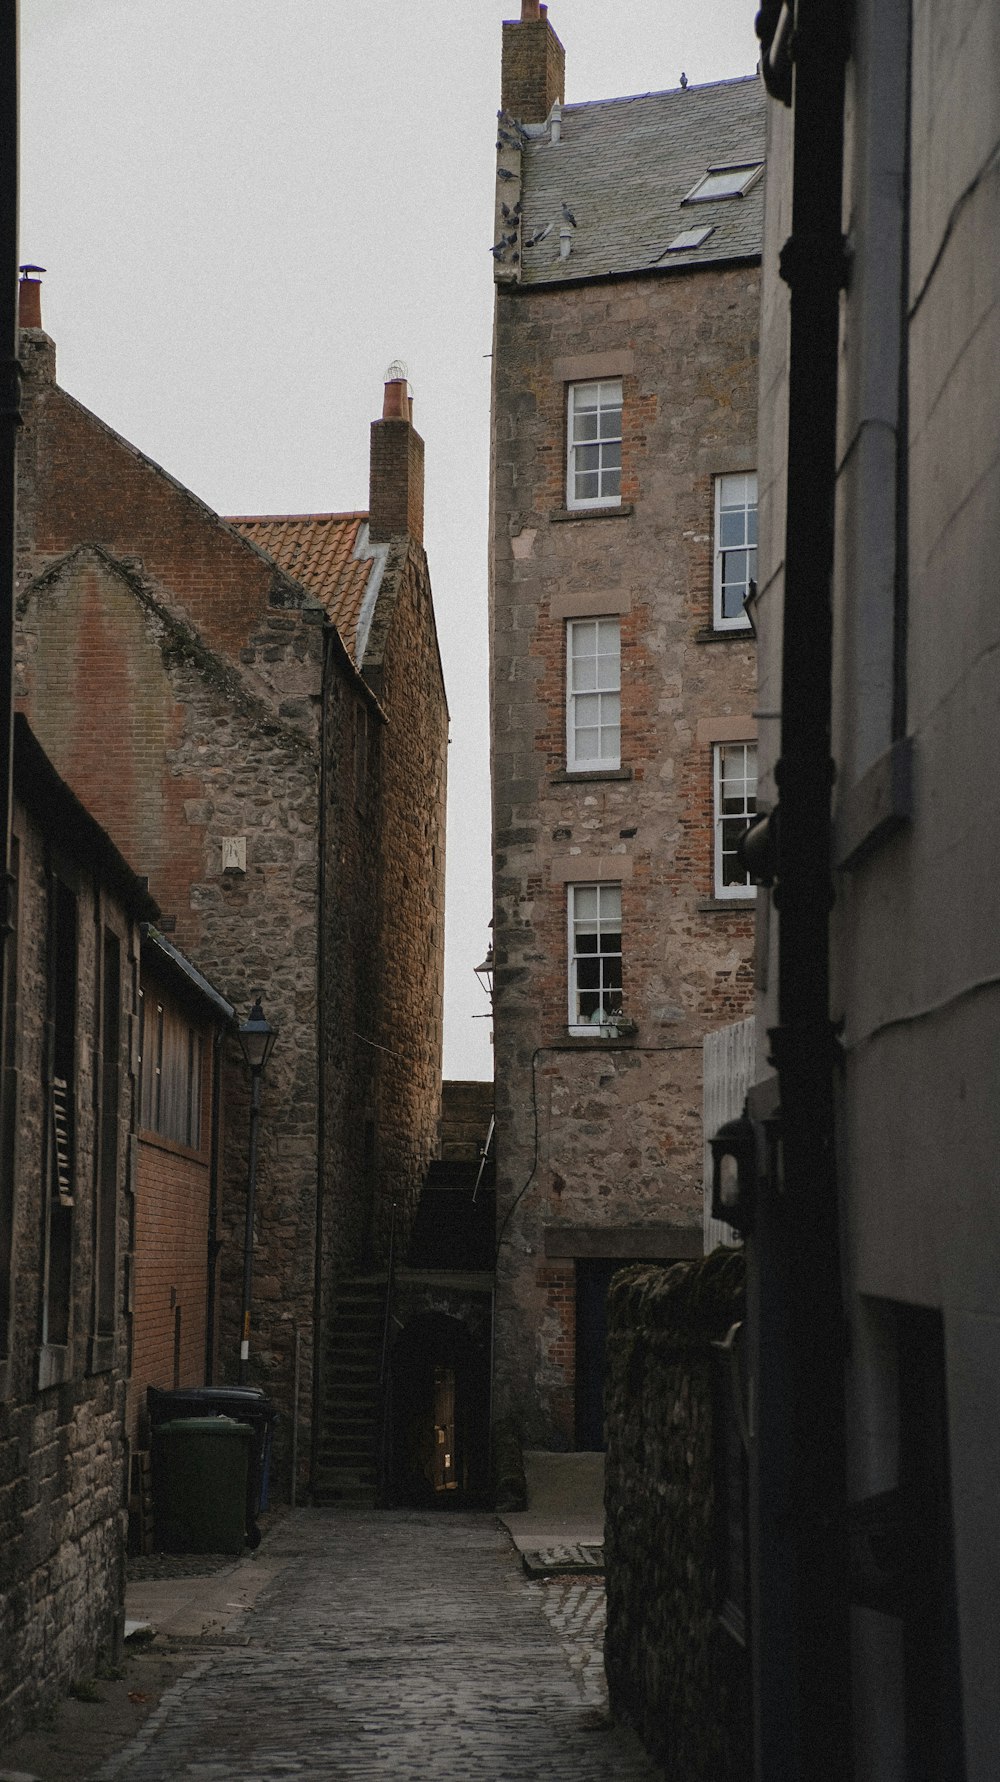 a cobblestone street between brick buildings